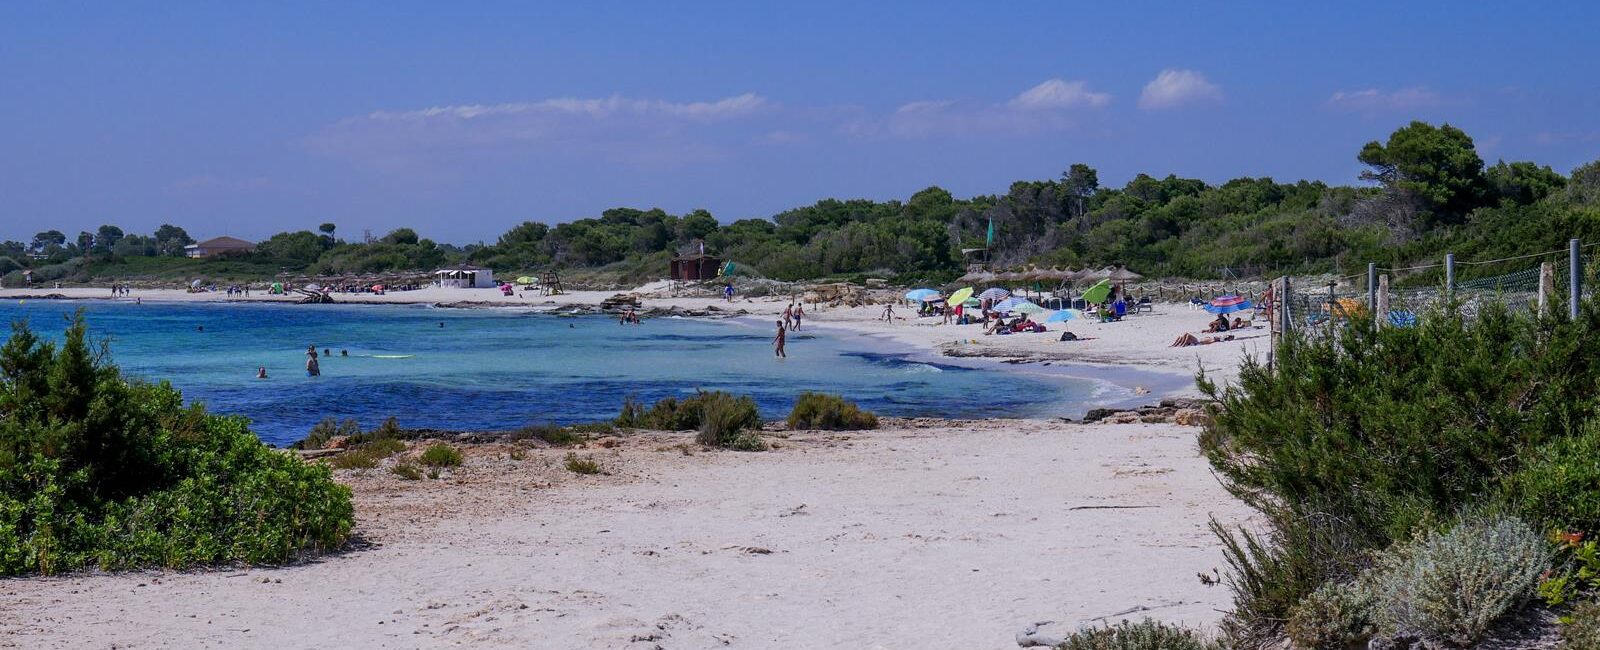 Platja des Dolc na Majorce – najsłodsza plaża na Majorce.